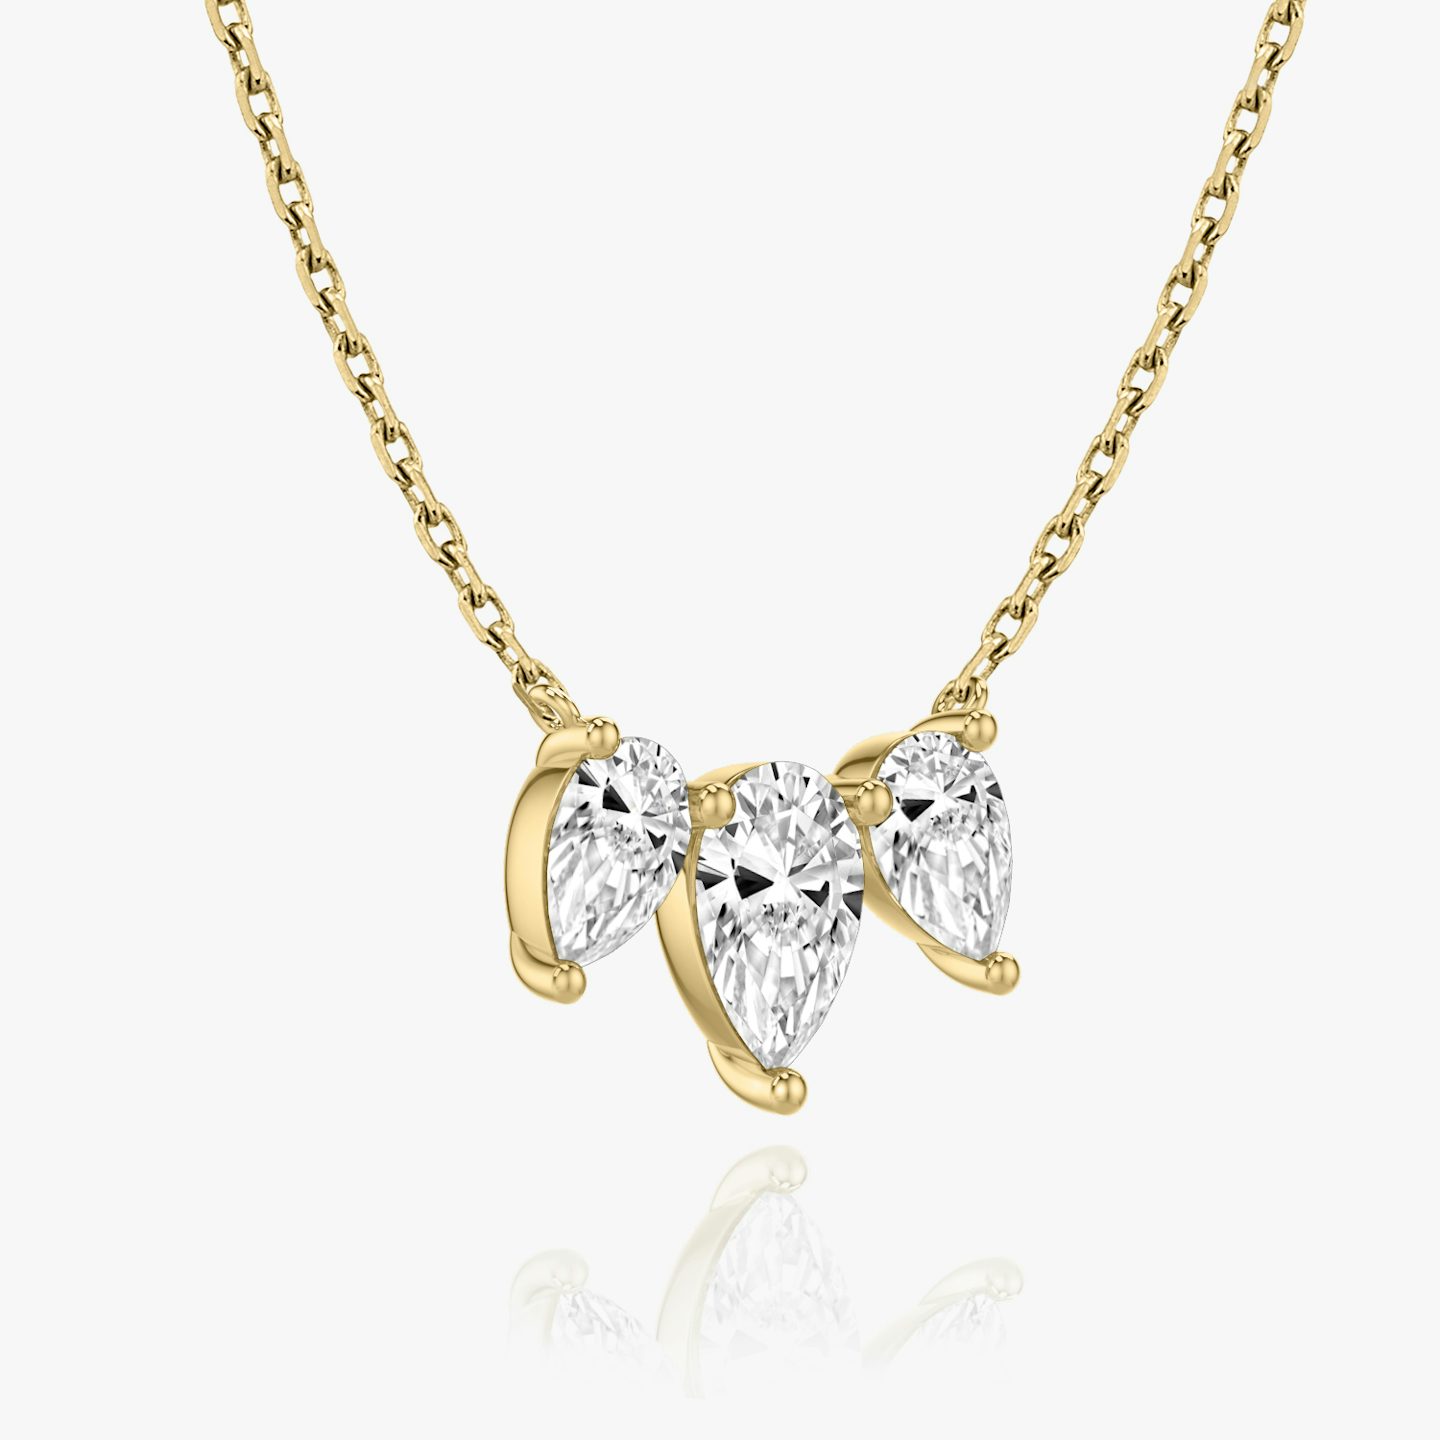 Arc Necklace | Pear | 14k | Yellow Gold | diamondCount: 3 | diamondSize: large | chainLength: 16-18